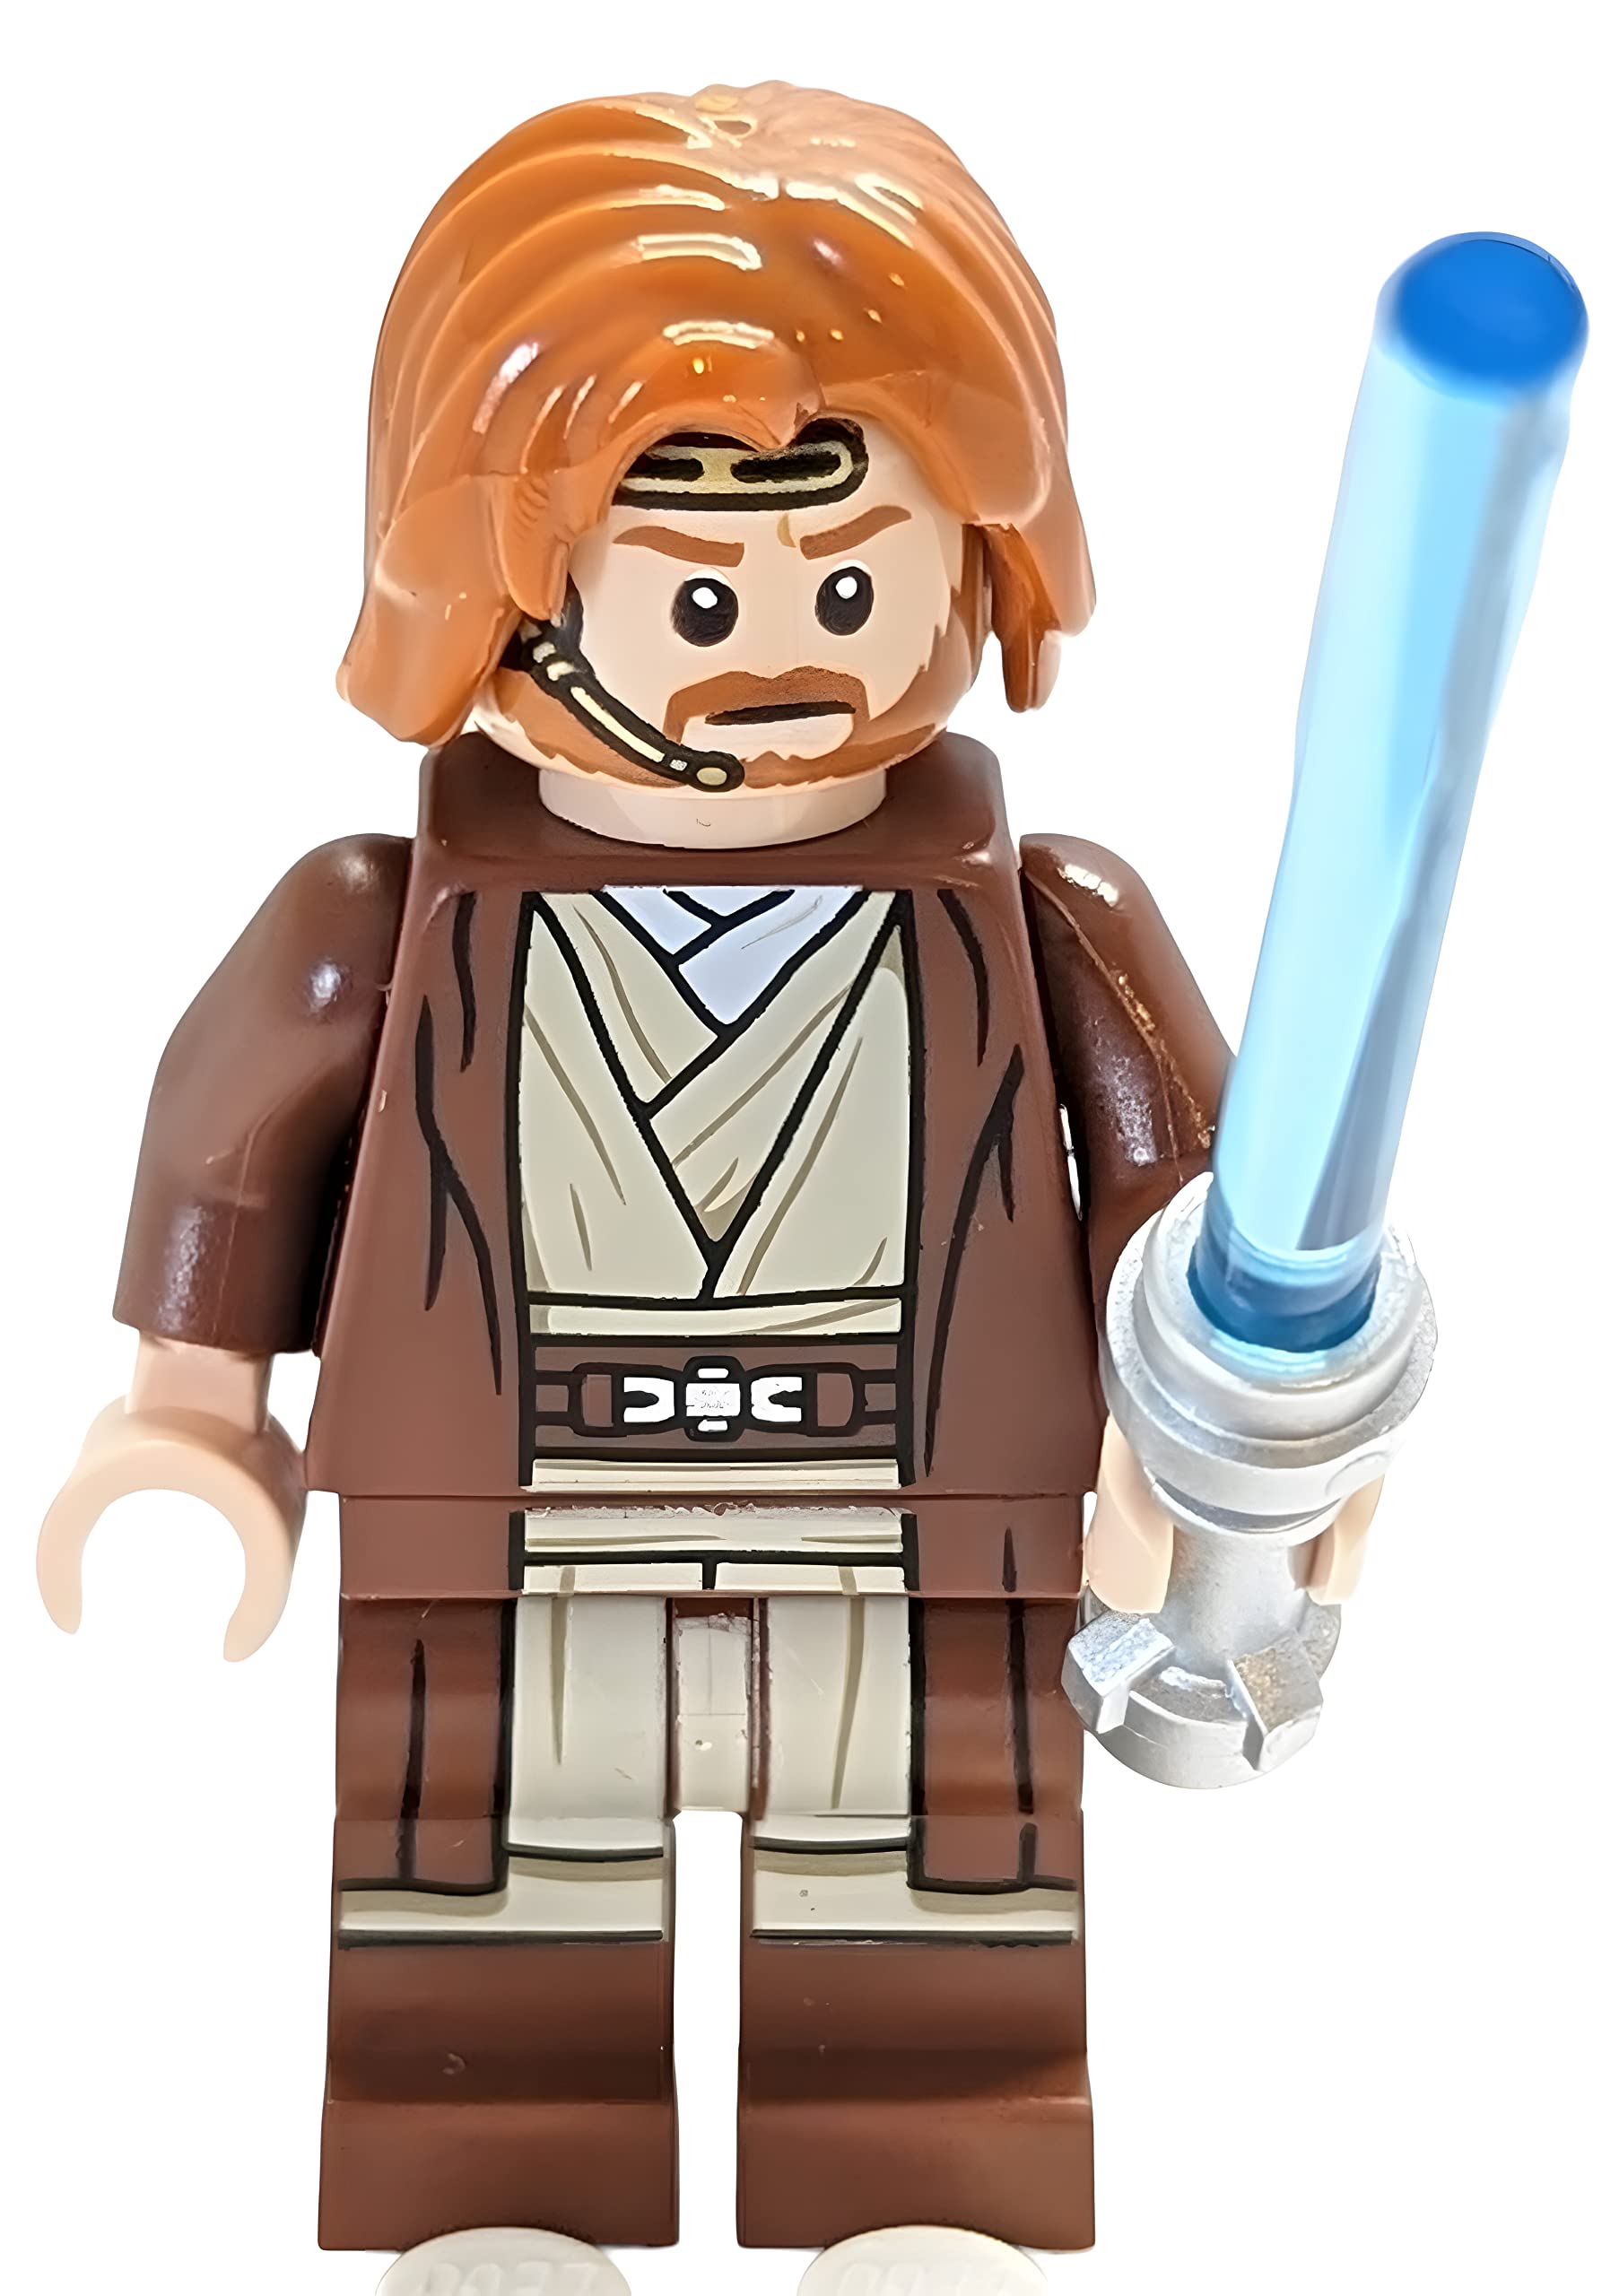 Lego Star Wars Mini Figure - Obi-Wan Kenobi with Lightsaber (Approximately 45mm / 1.8 Inch Tall)